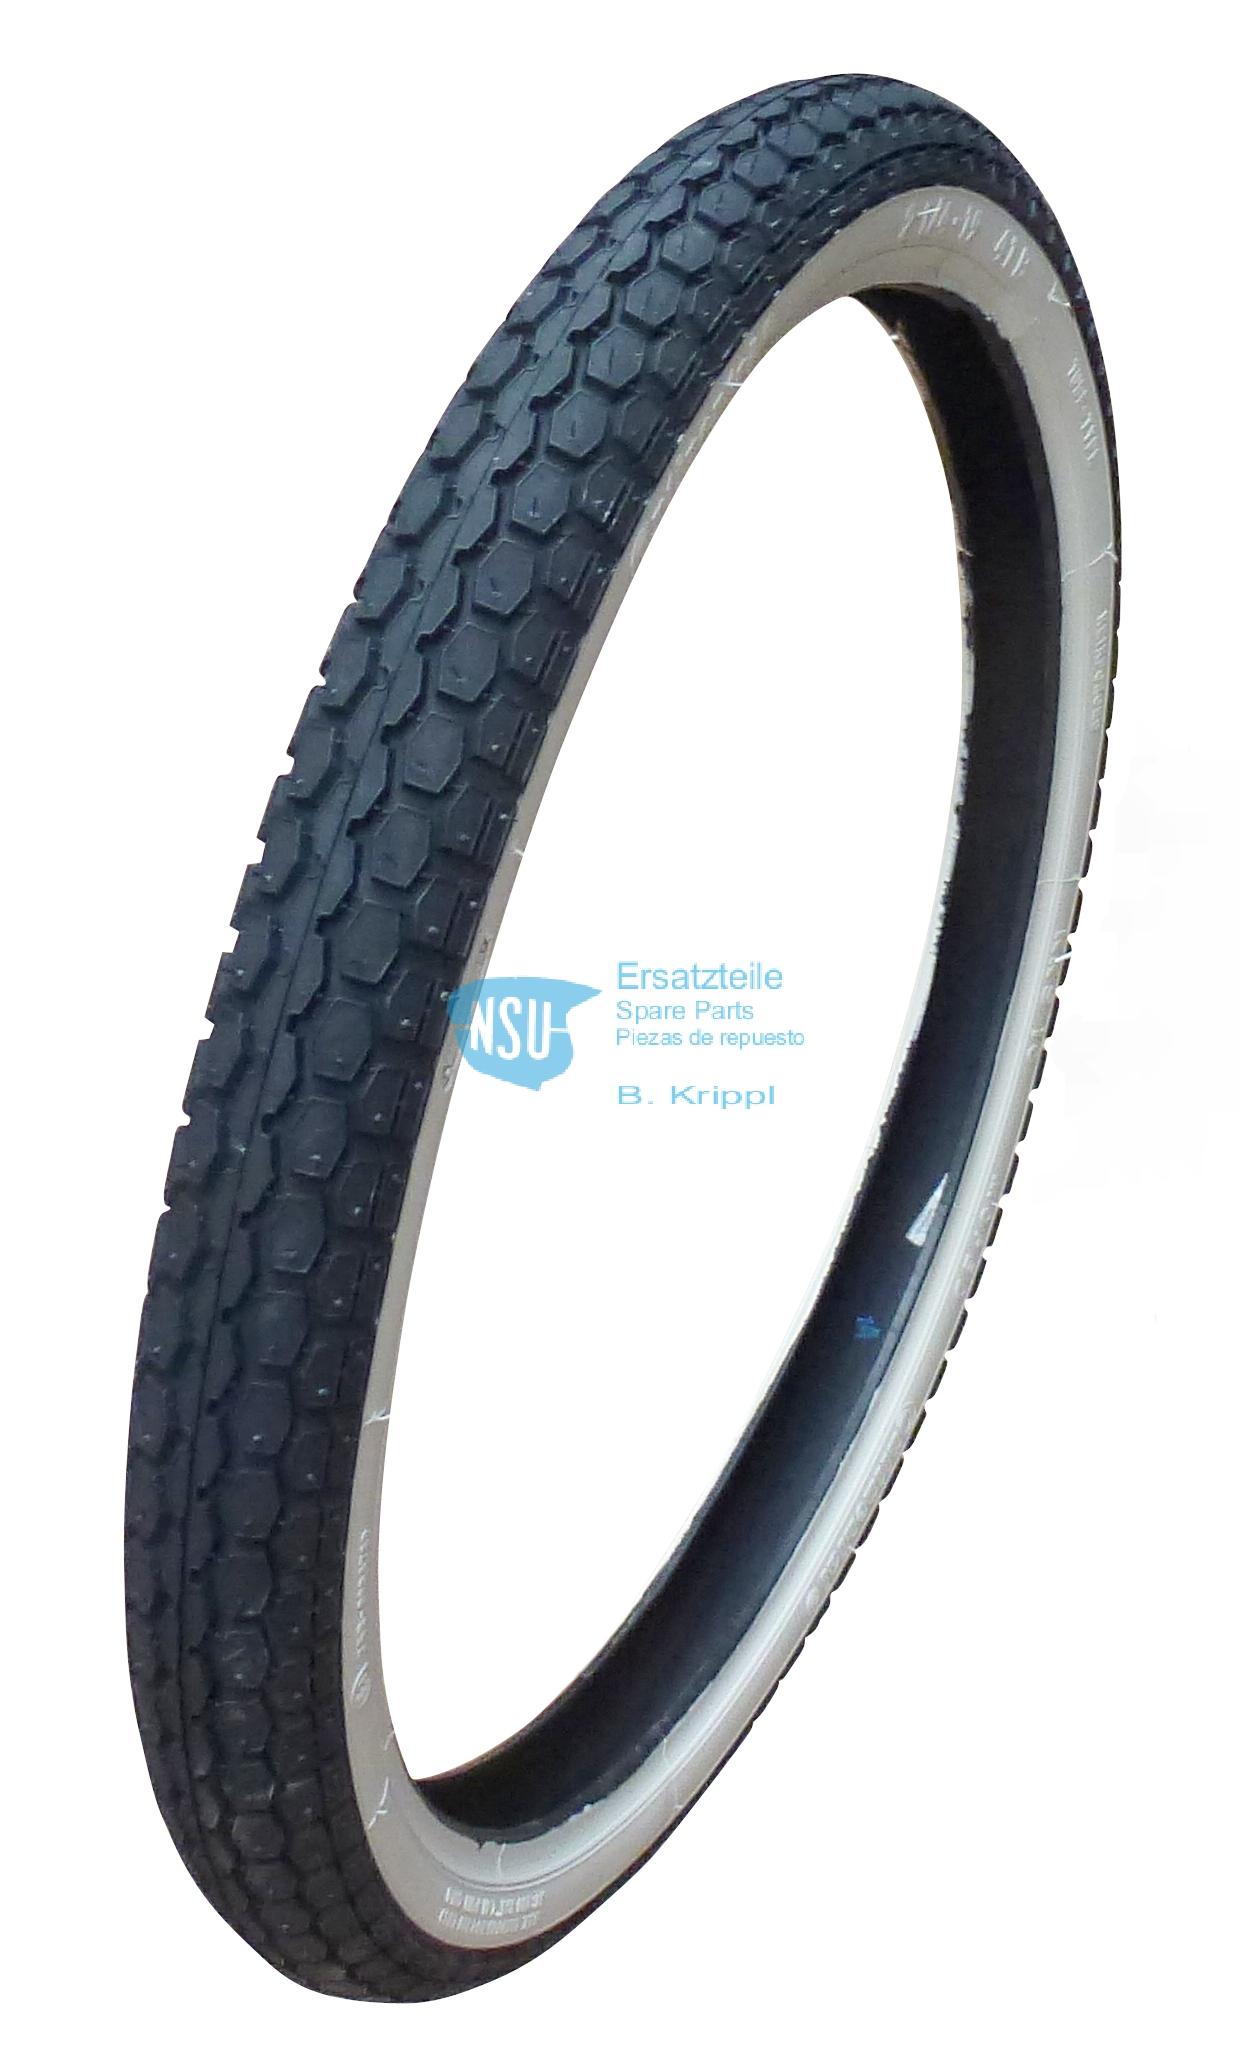 White wall tyre 23X2.25 (2.25-19)